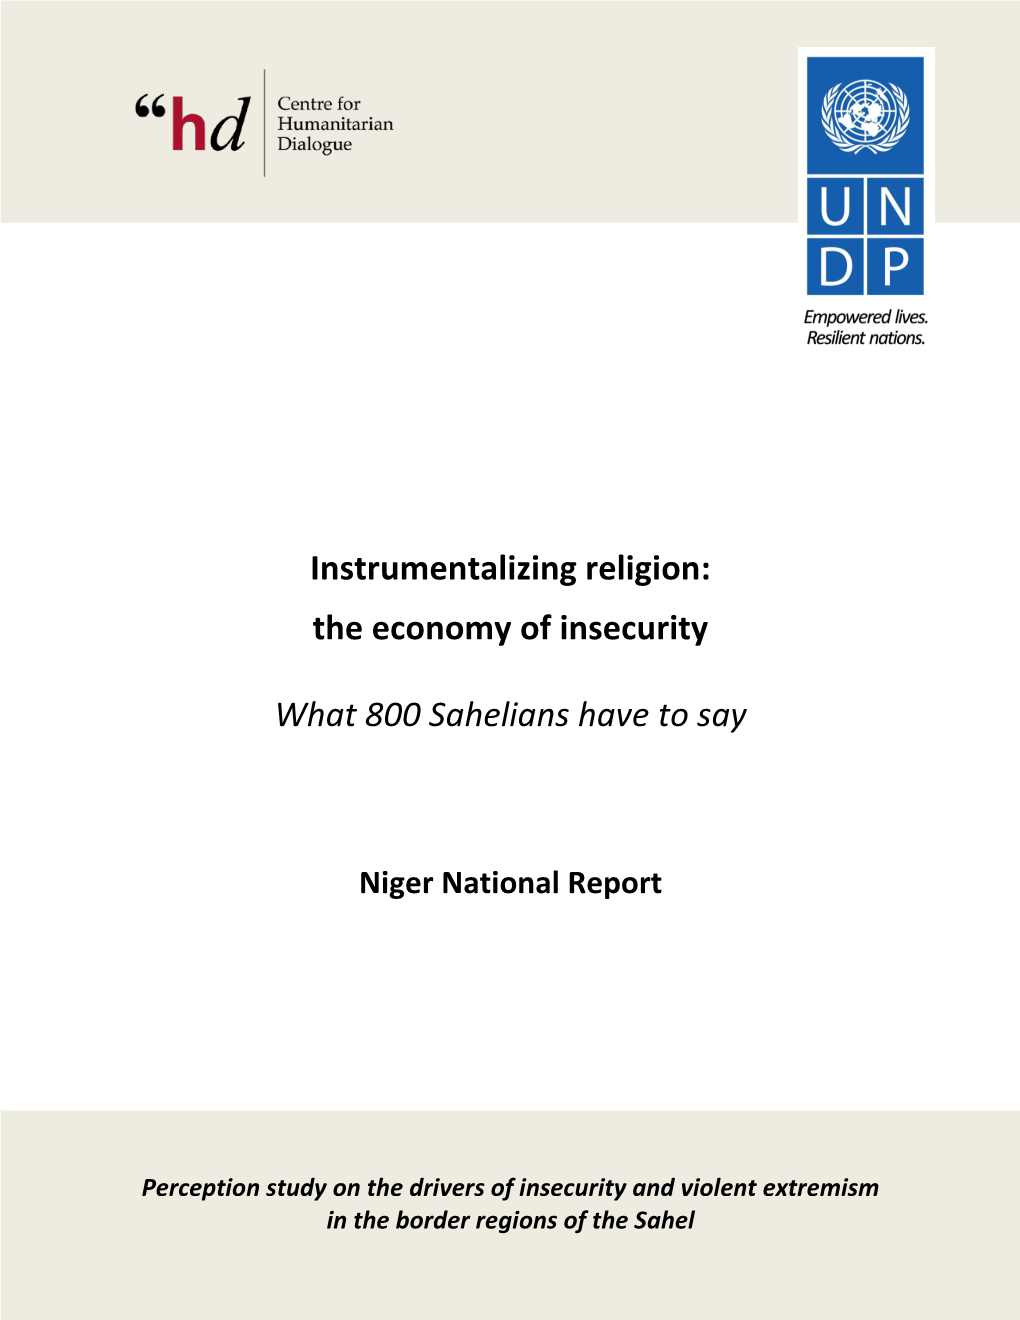 Instrumentalizing Religion: the Economy of Insecurity